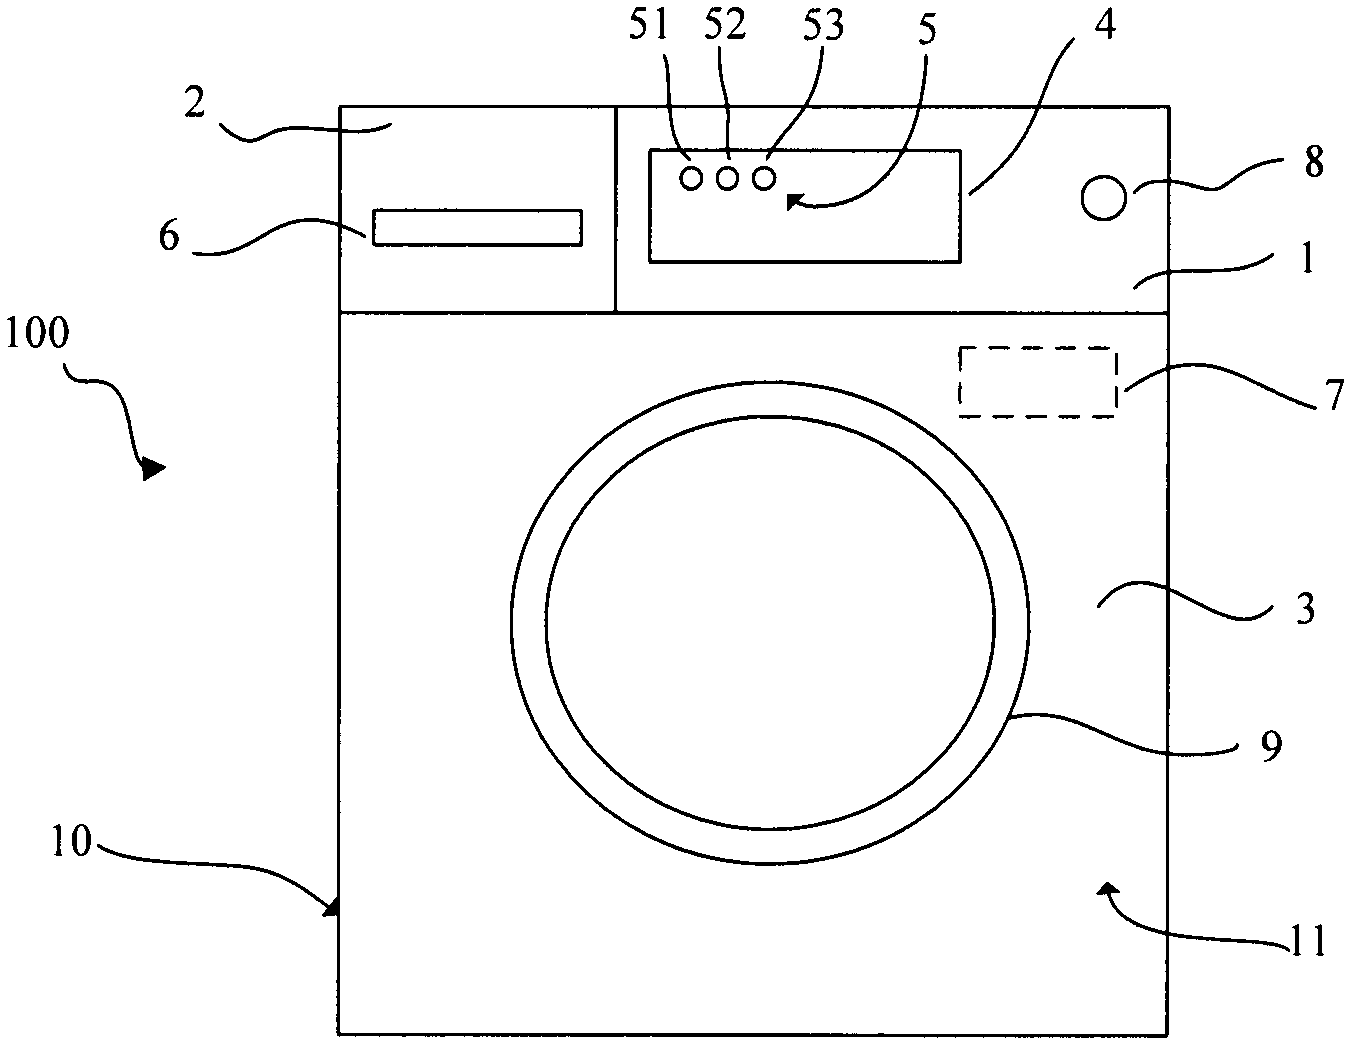 Washing machine and control method